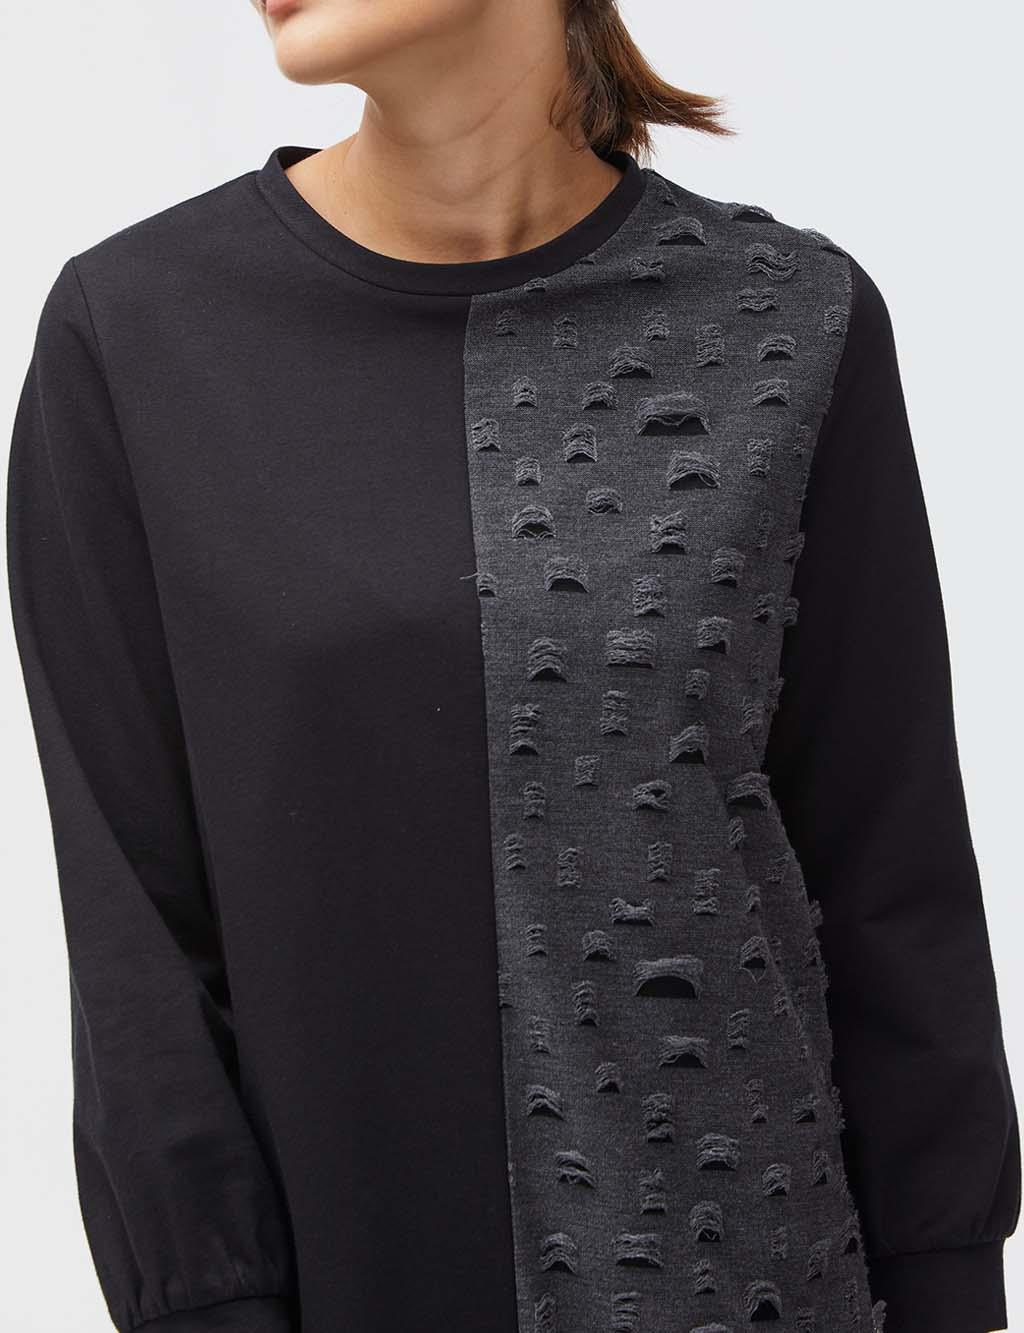 Eskitme Detaylı Parçalı Sweatshirt Siyah A21 31011